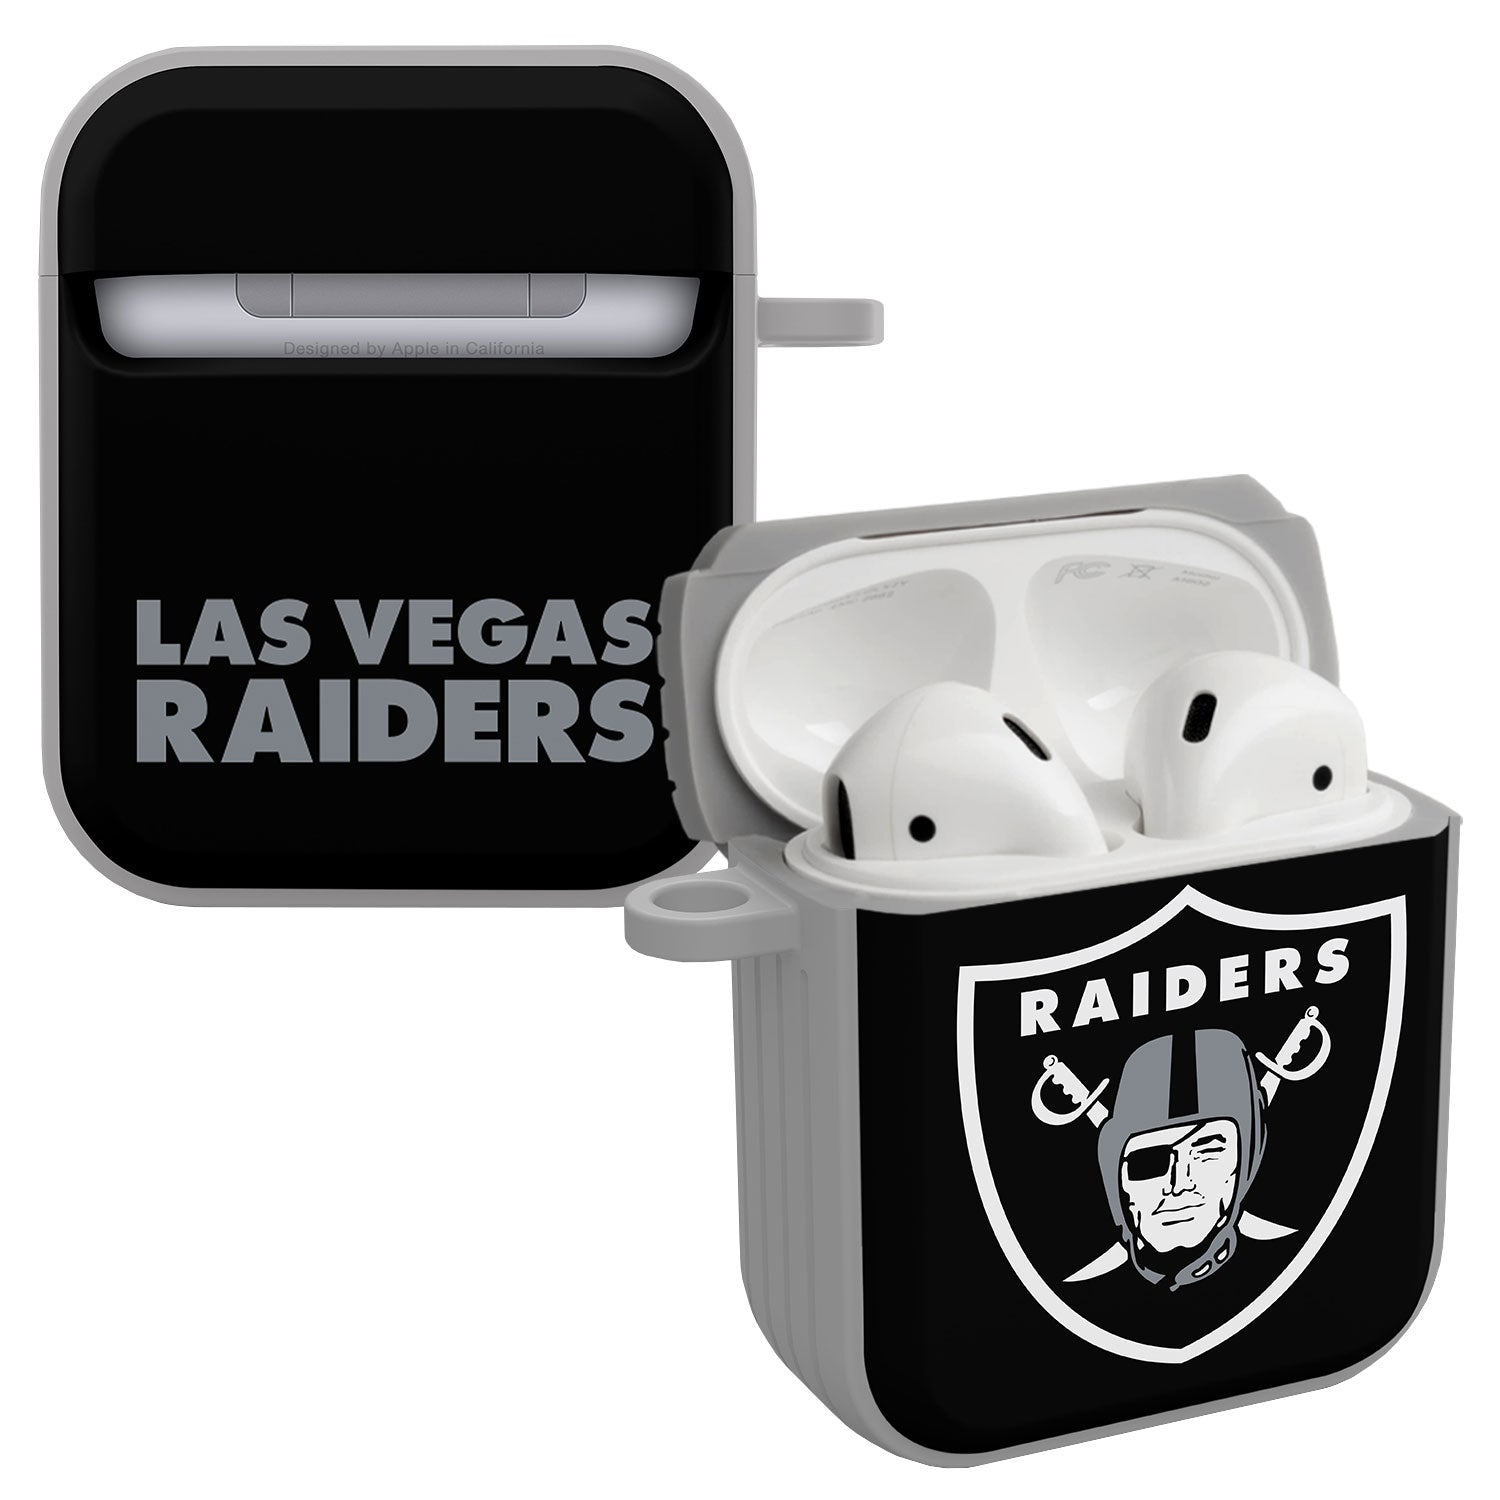 Las Vegas Raiders HDX Apple AirPods Gen 1 & 2 Case Cover